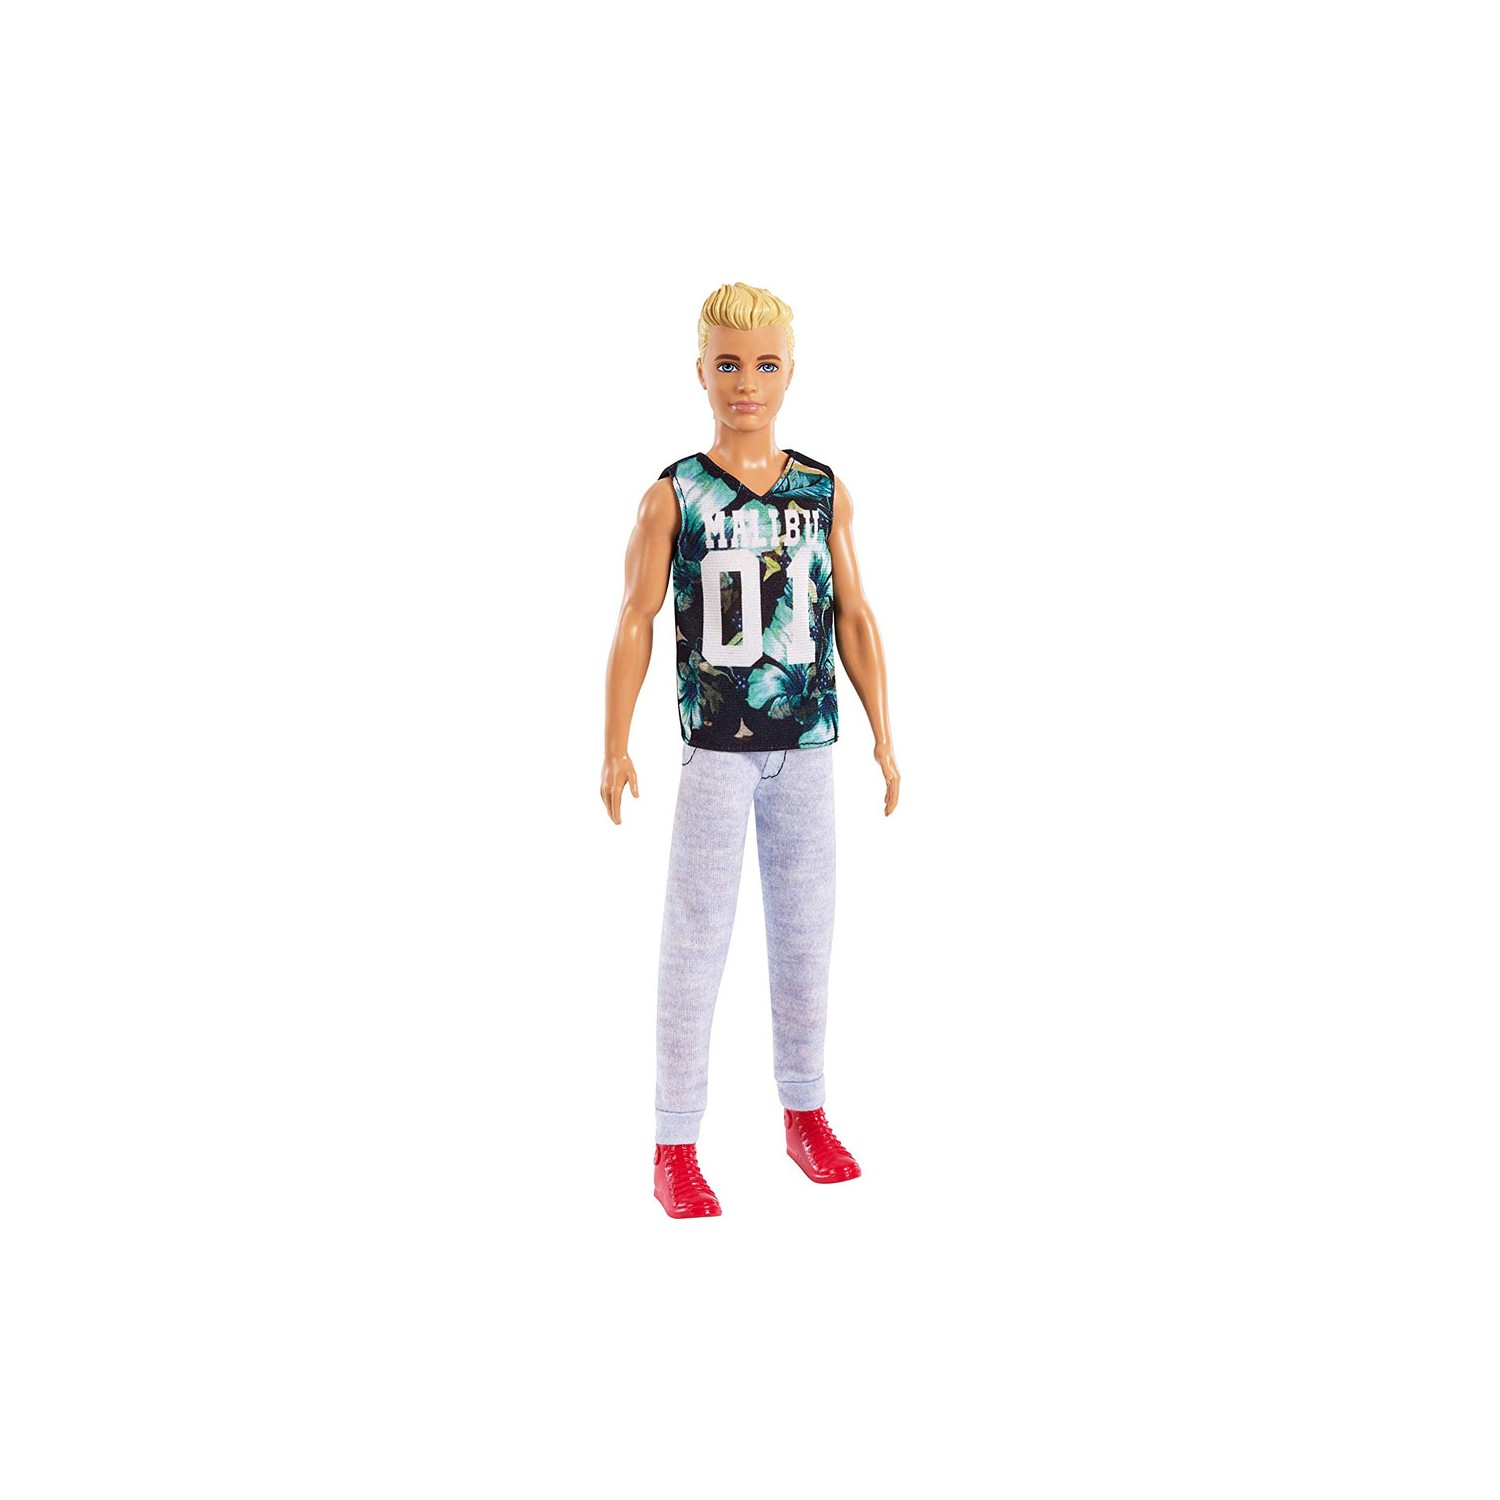 Кукла Barbie Кен DWK44-FXL63